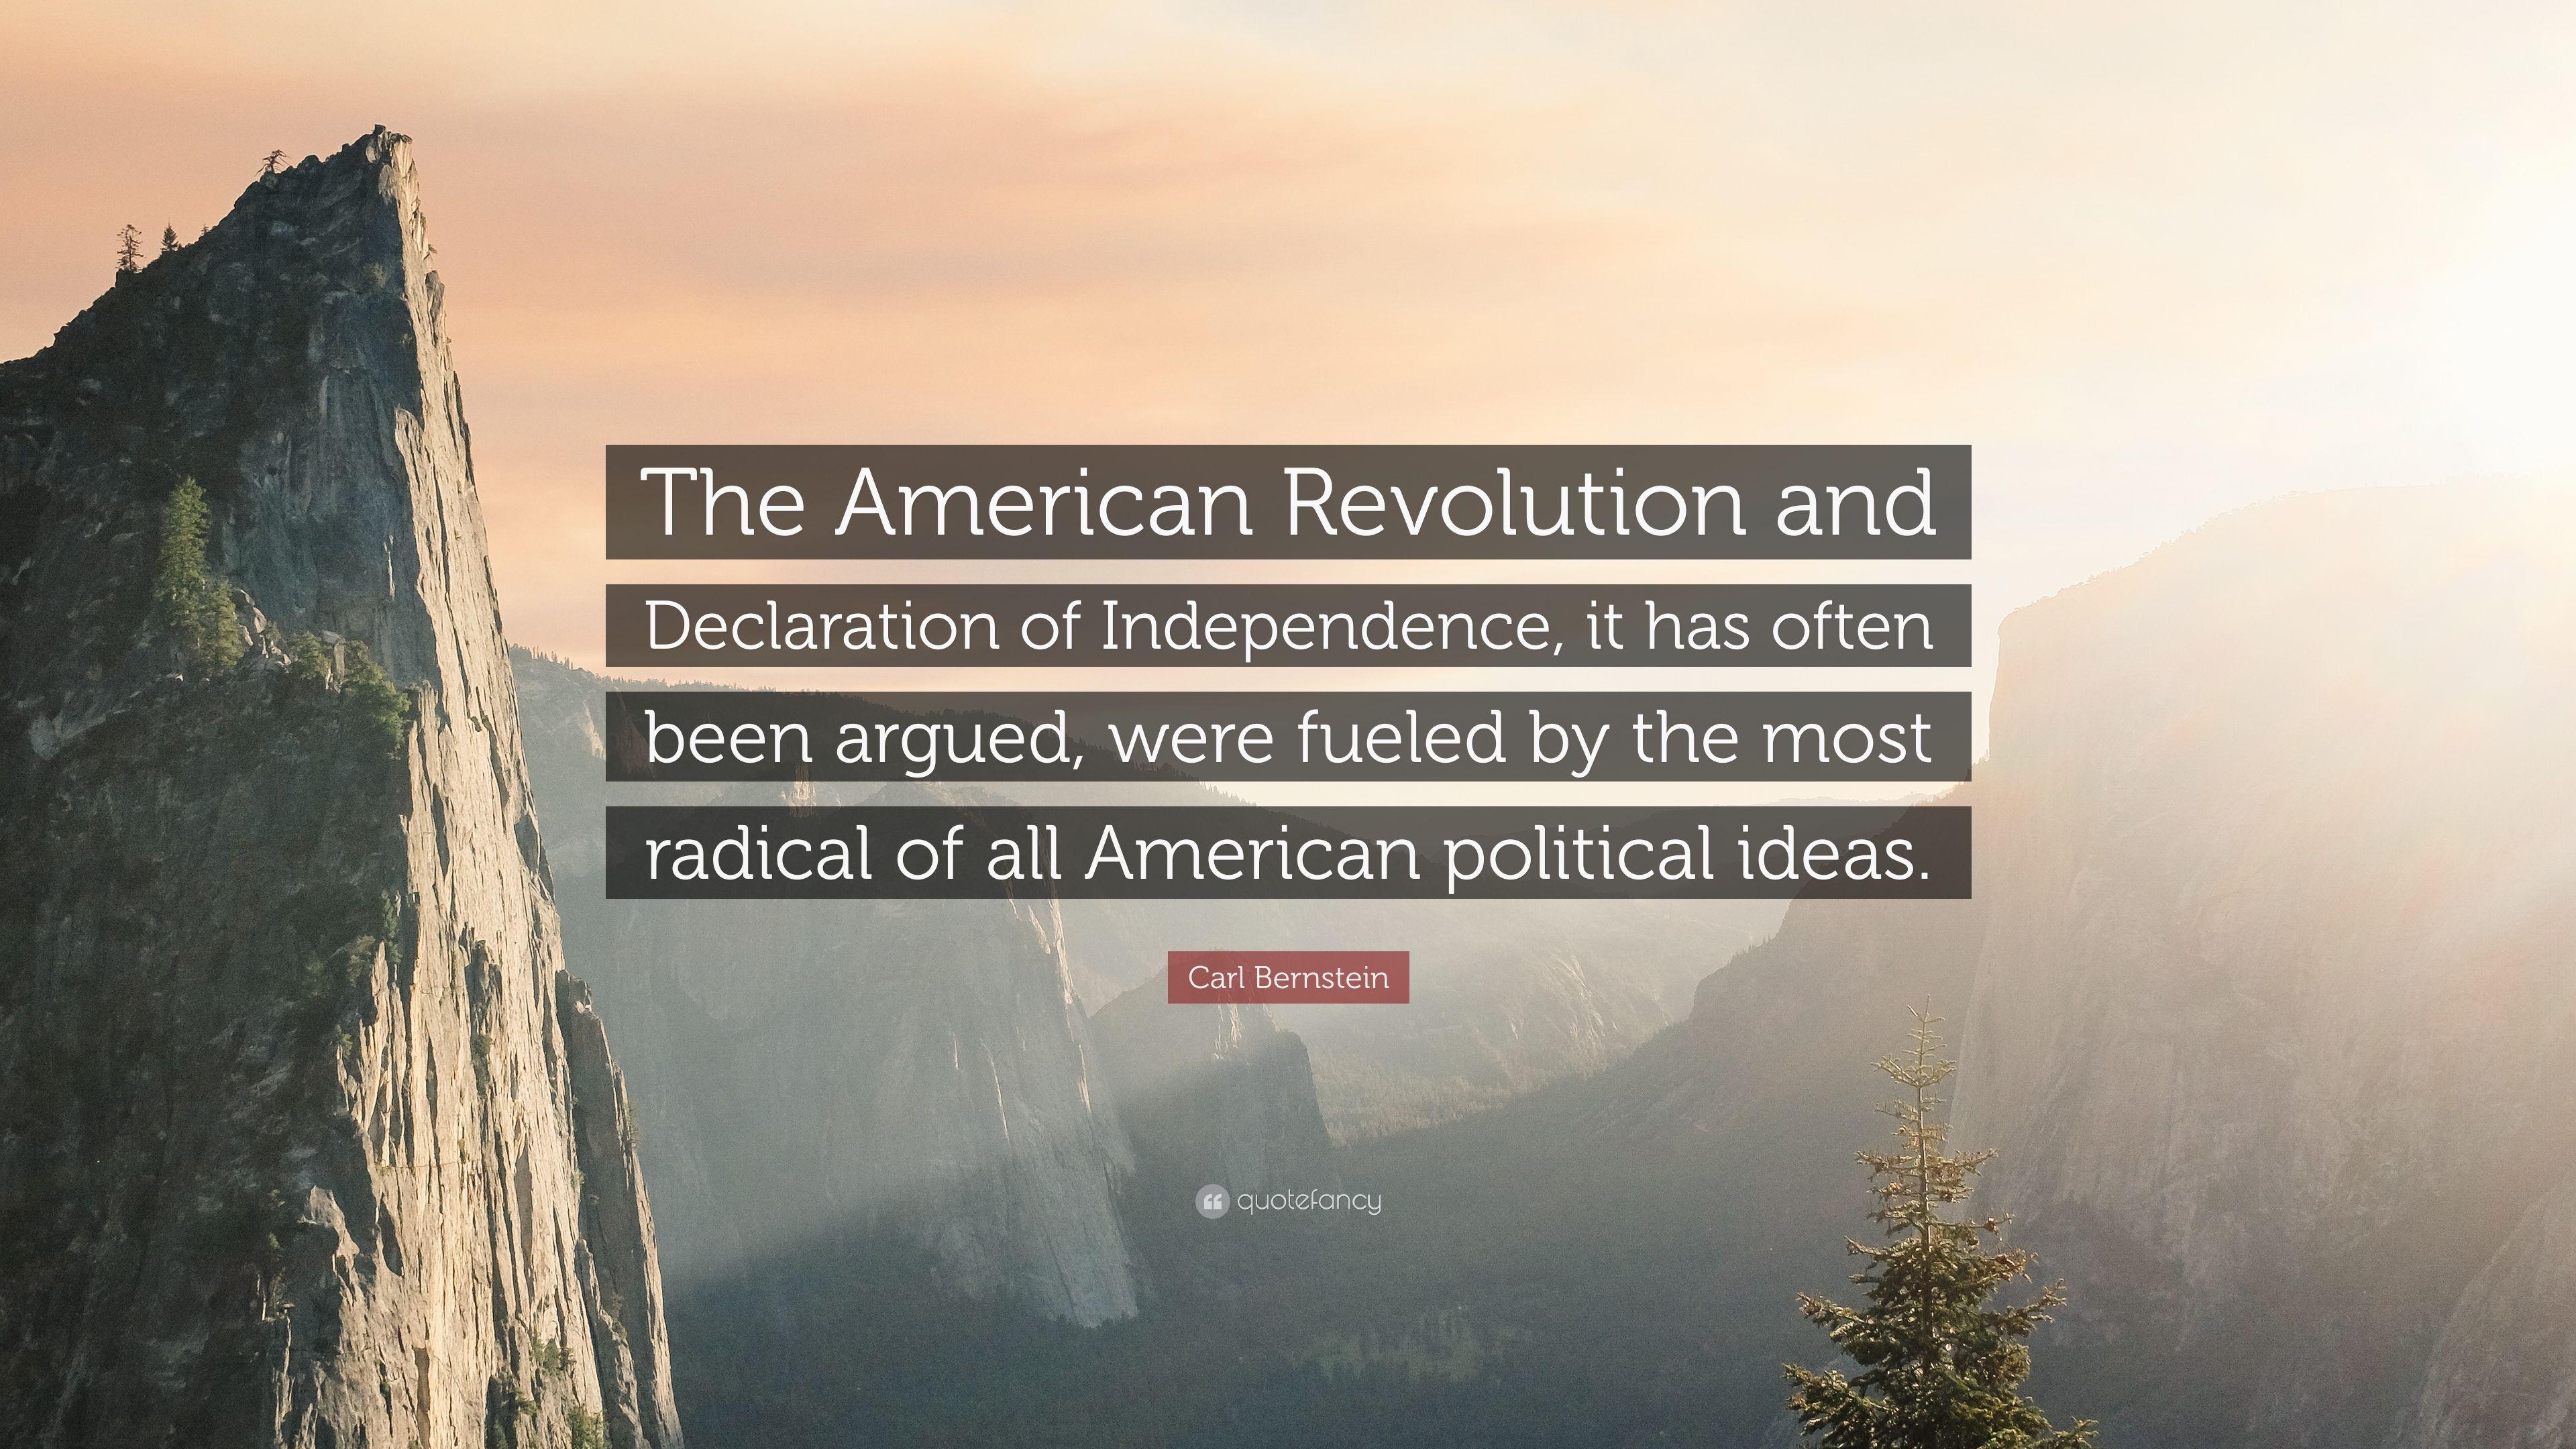 Carl Bernstein Quote: “The American Revolution and Declaration